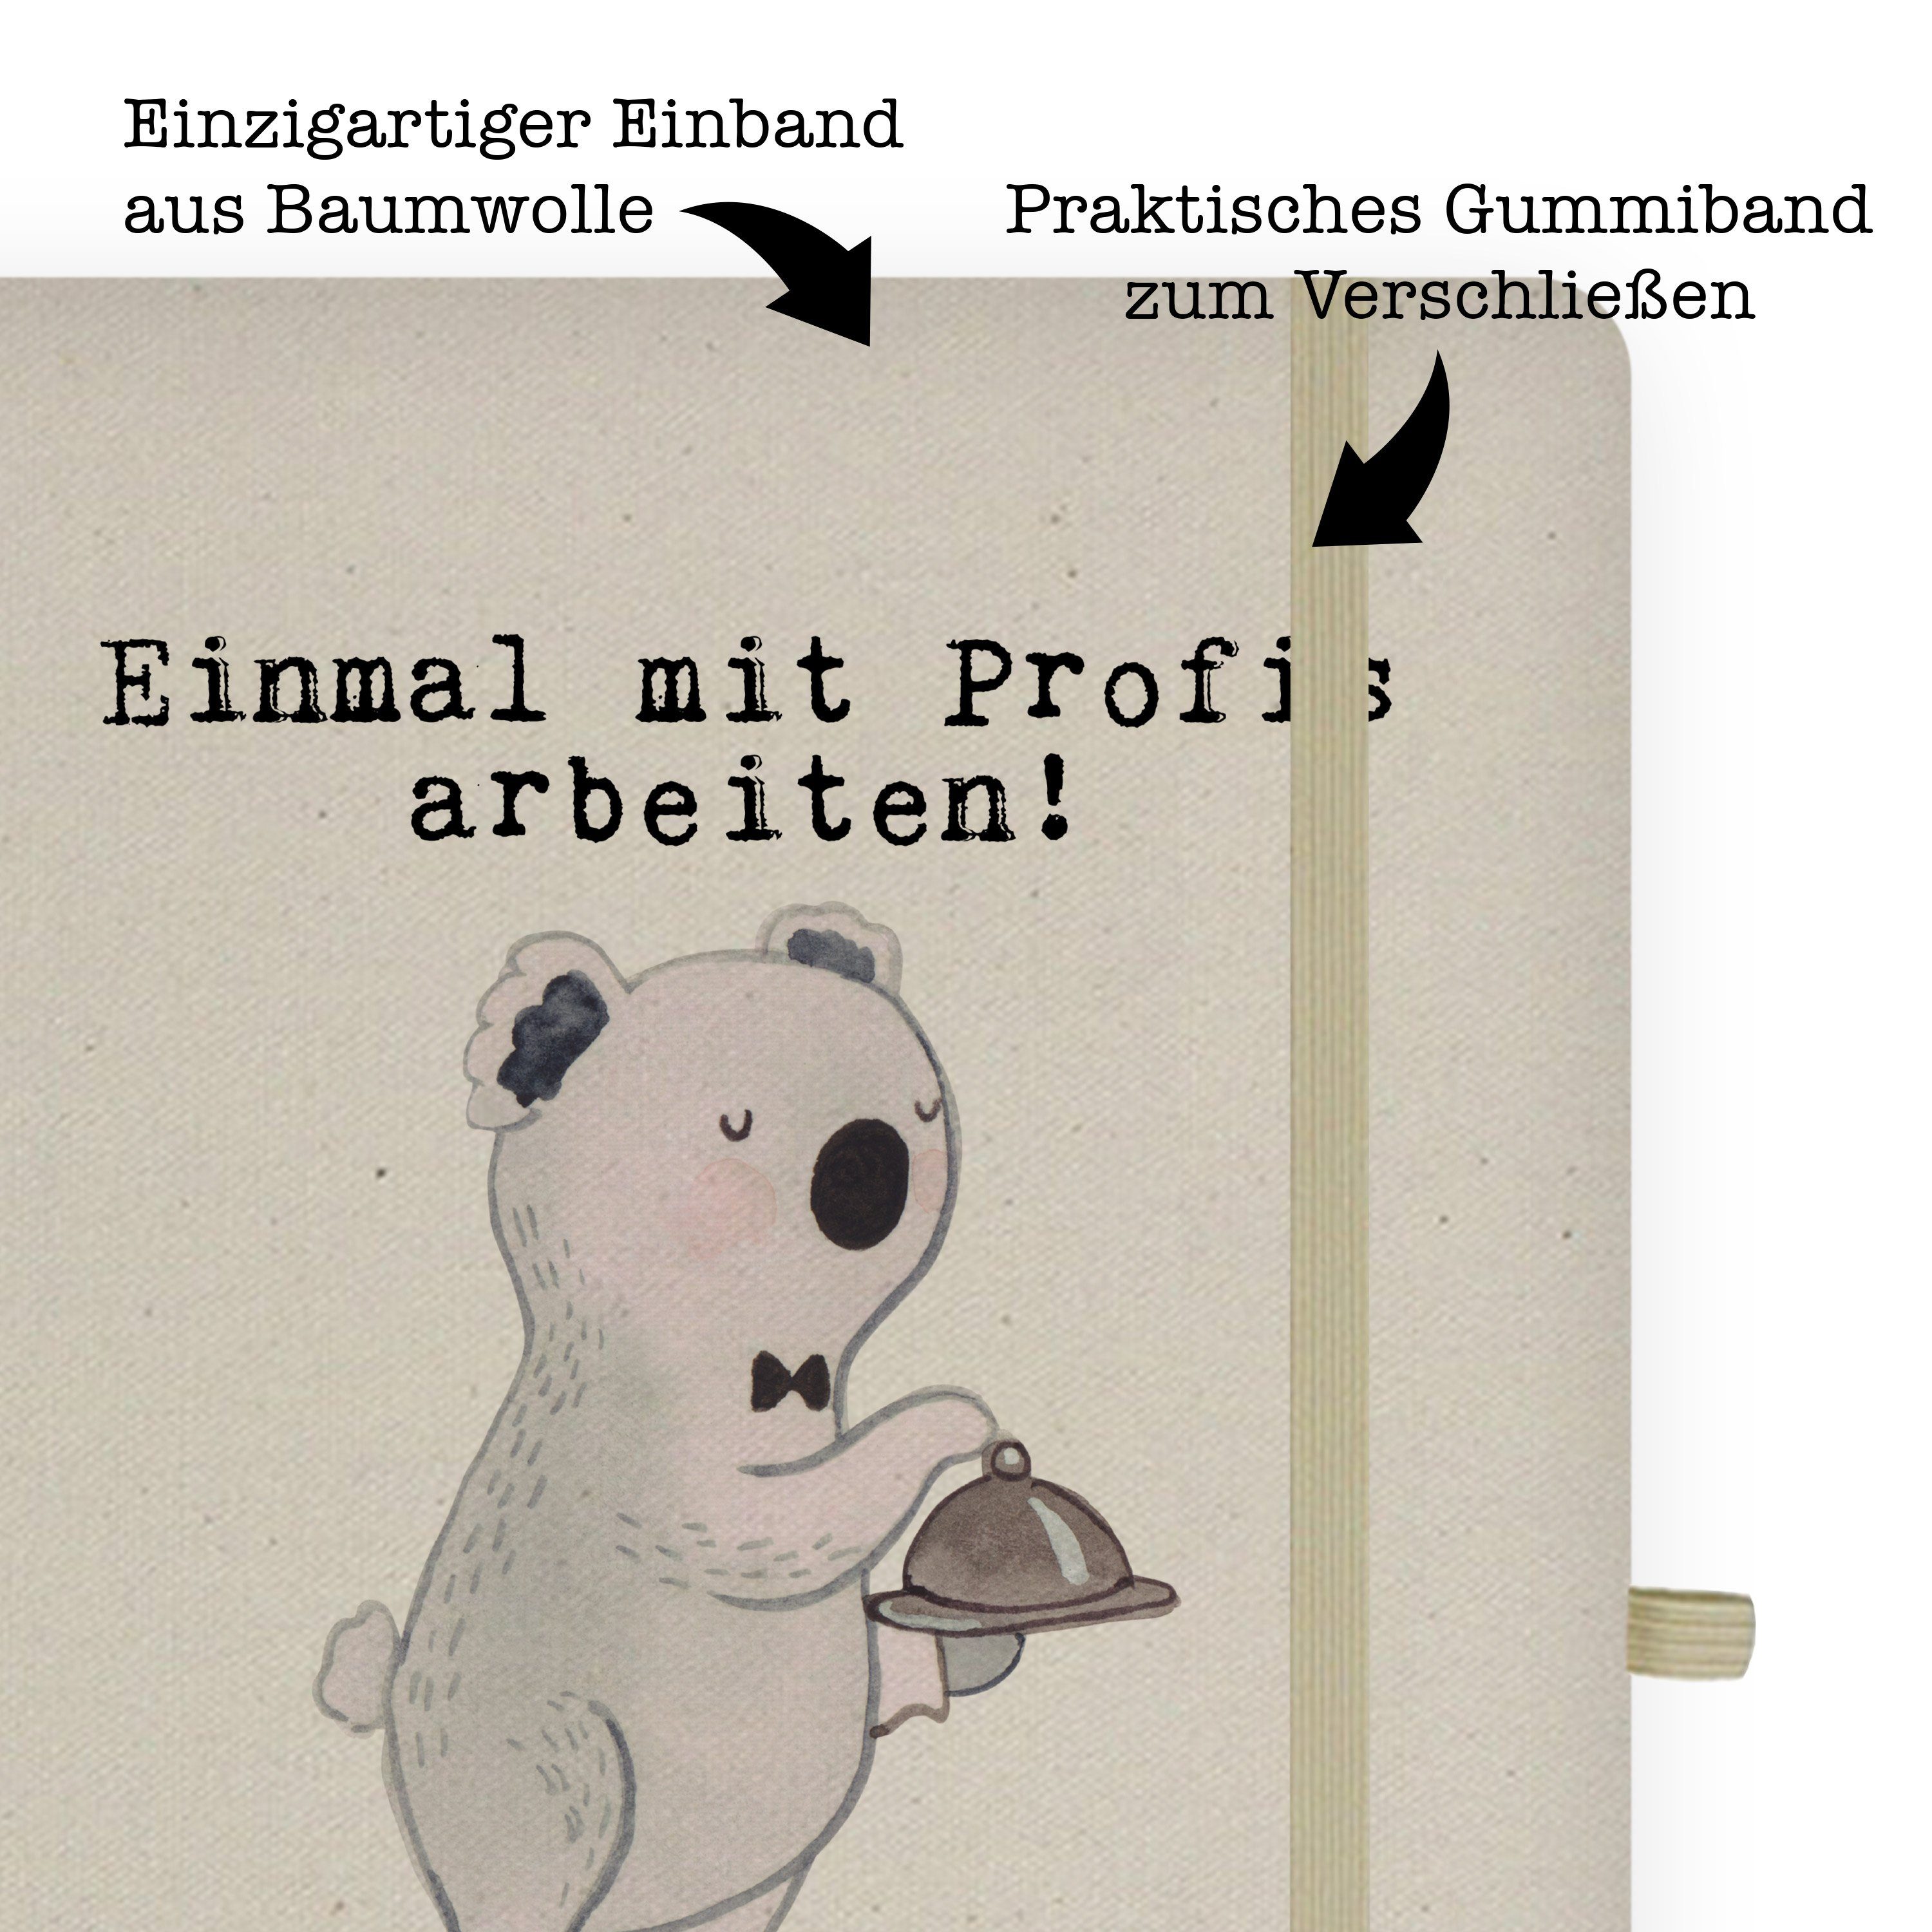 & Mrs. - Transparent - Notizbuch Mr. Geschenk, Leidenschaft Schreib aus Panda & Mrs. Panda Restaurantfachmann Mr.